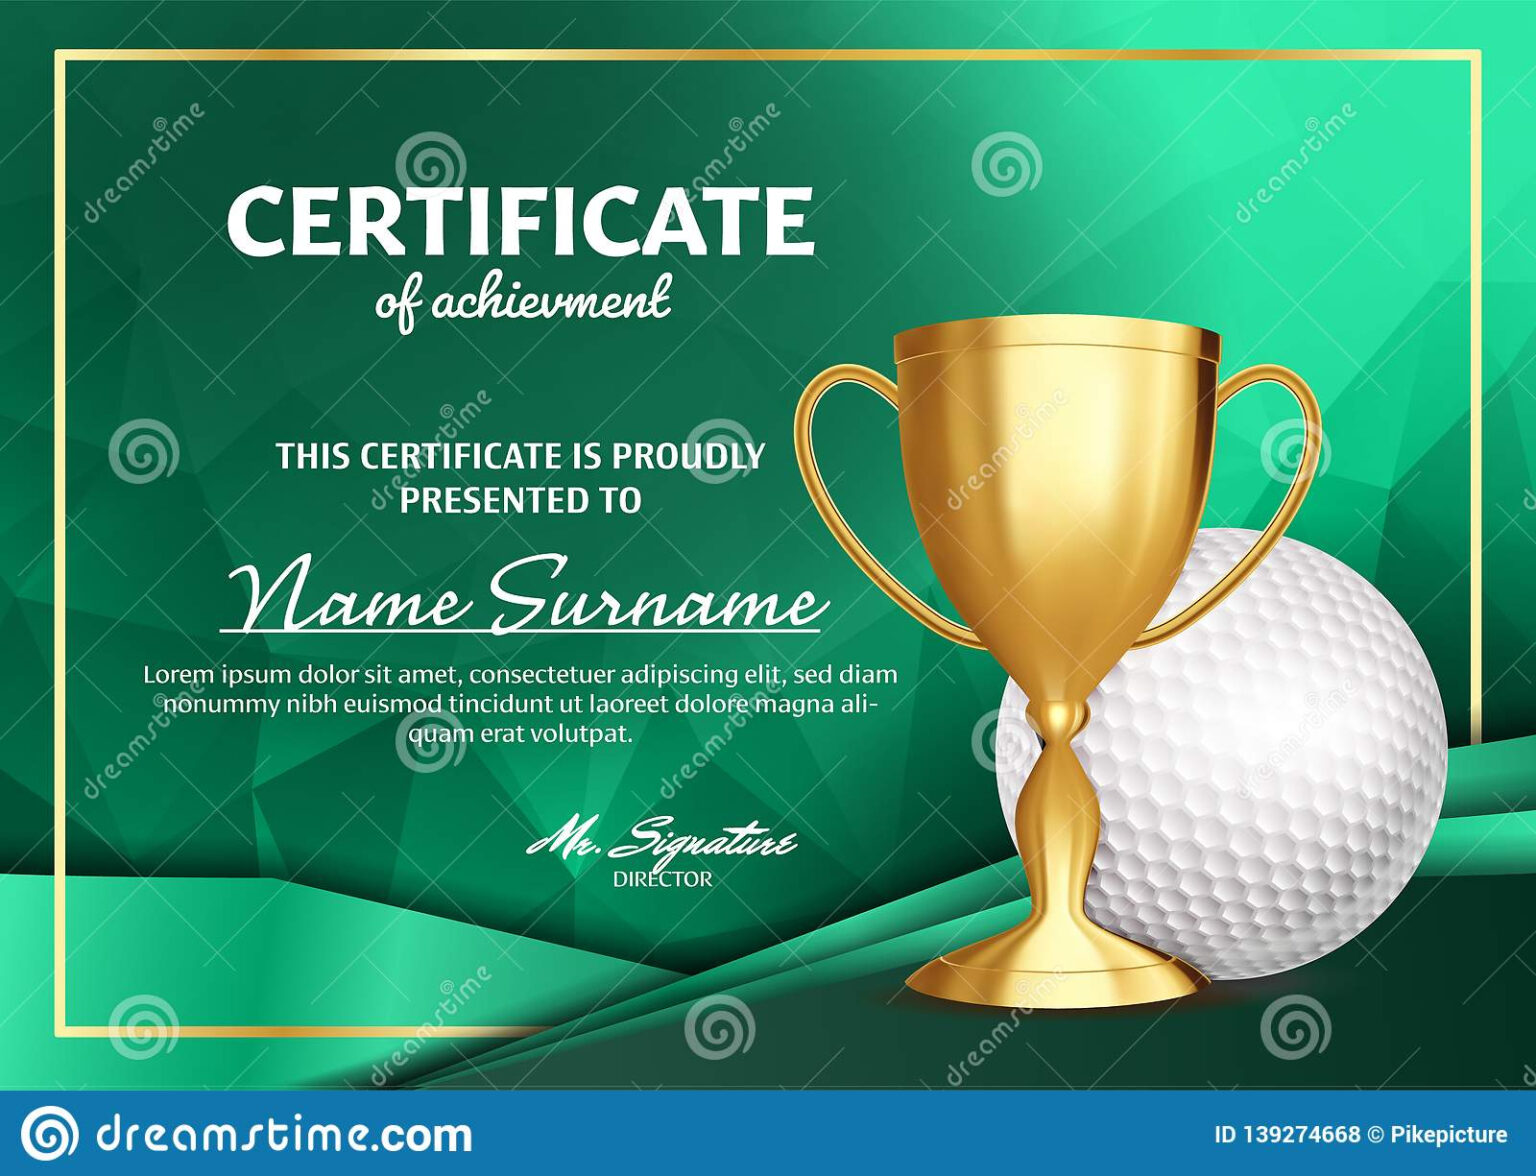 turning stone casino golf certificates